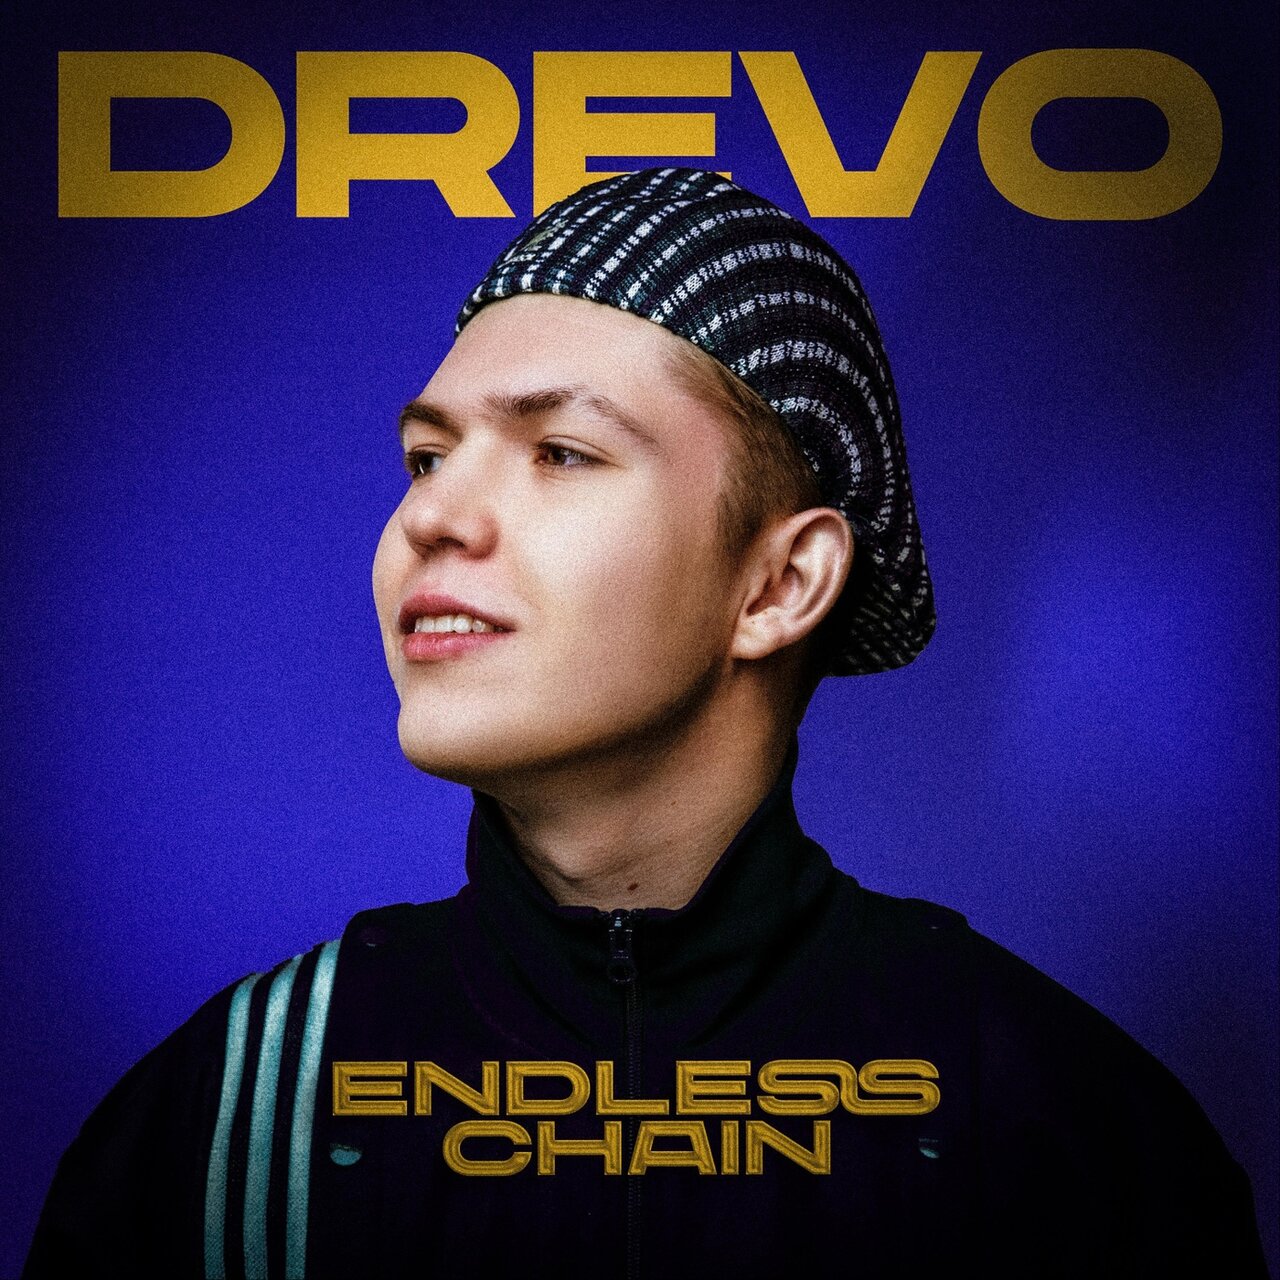 Drevo Endless Chain cover artwork